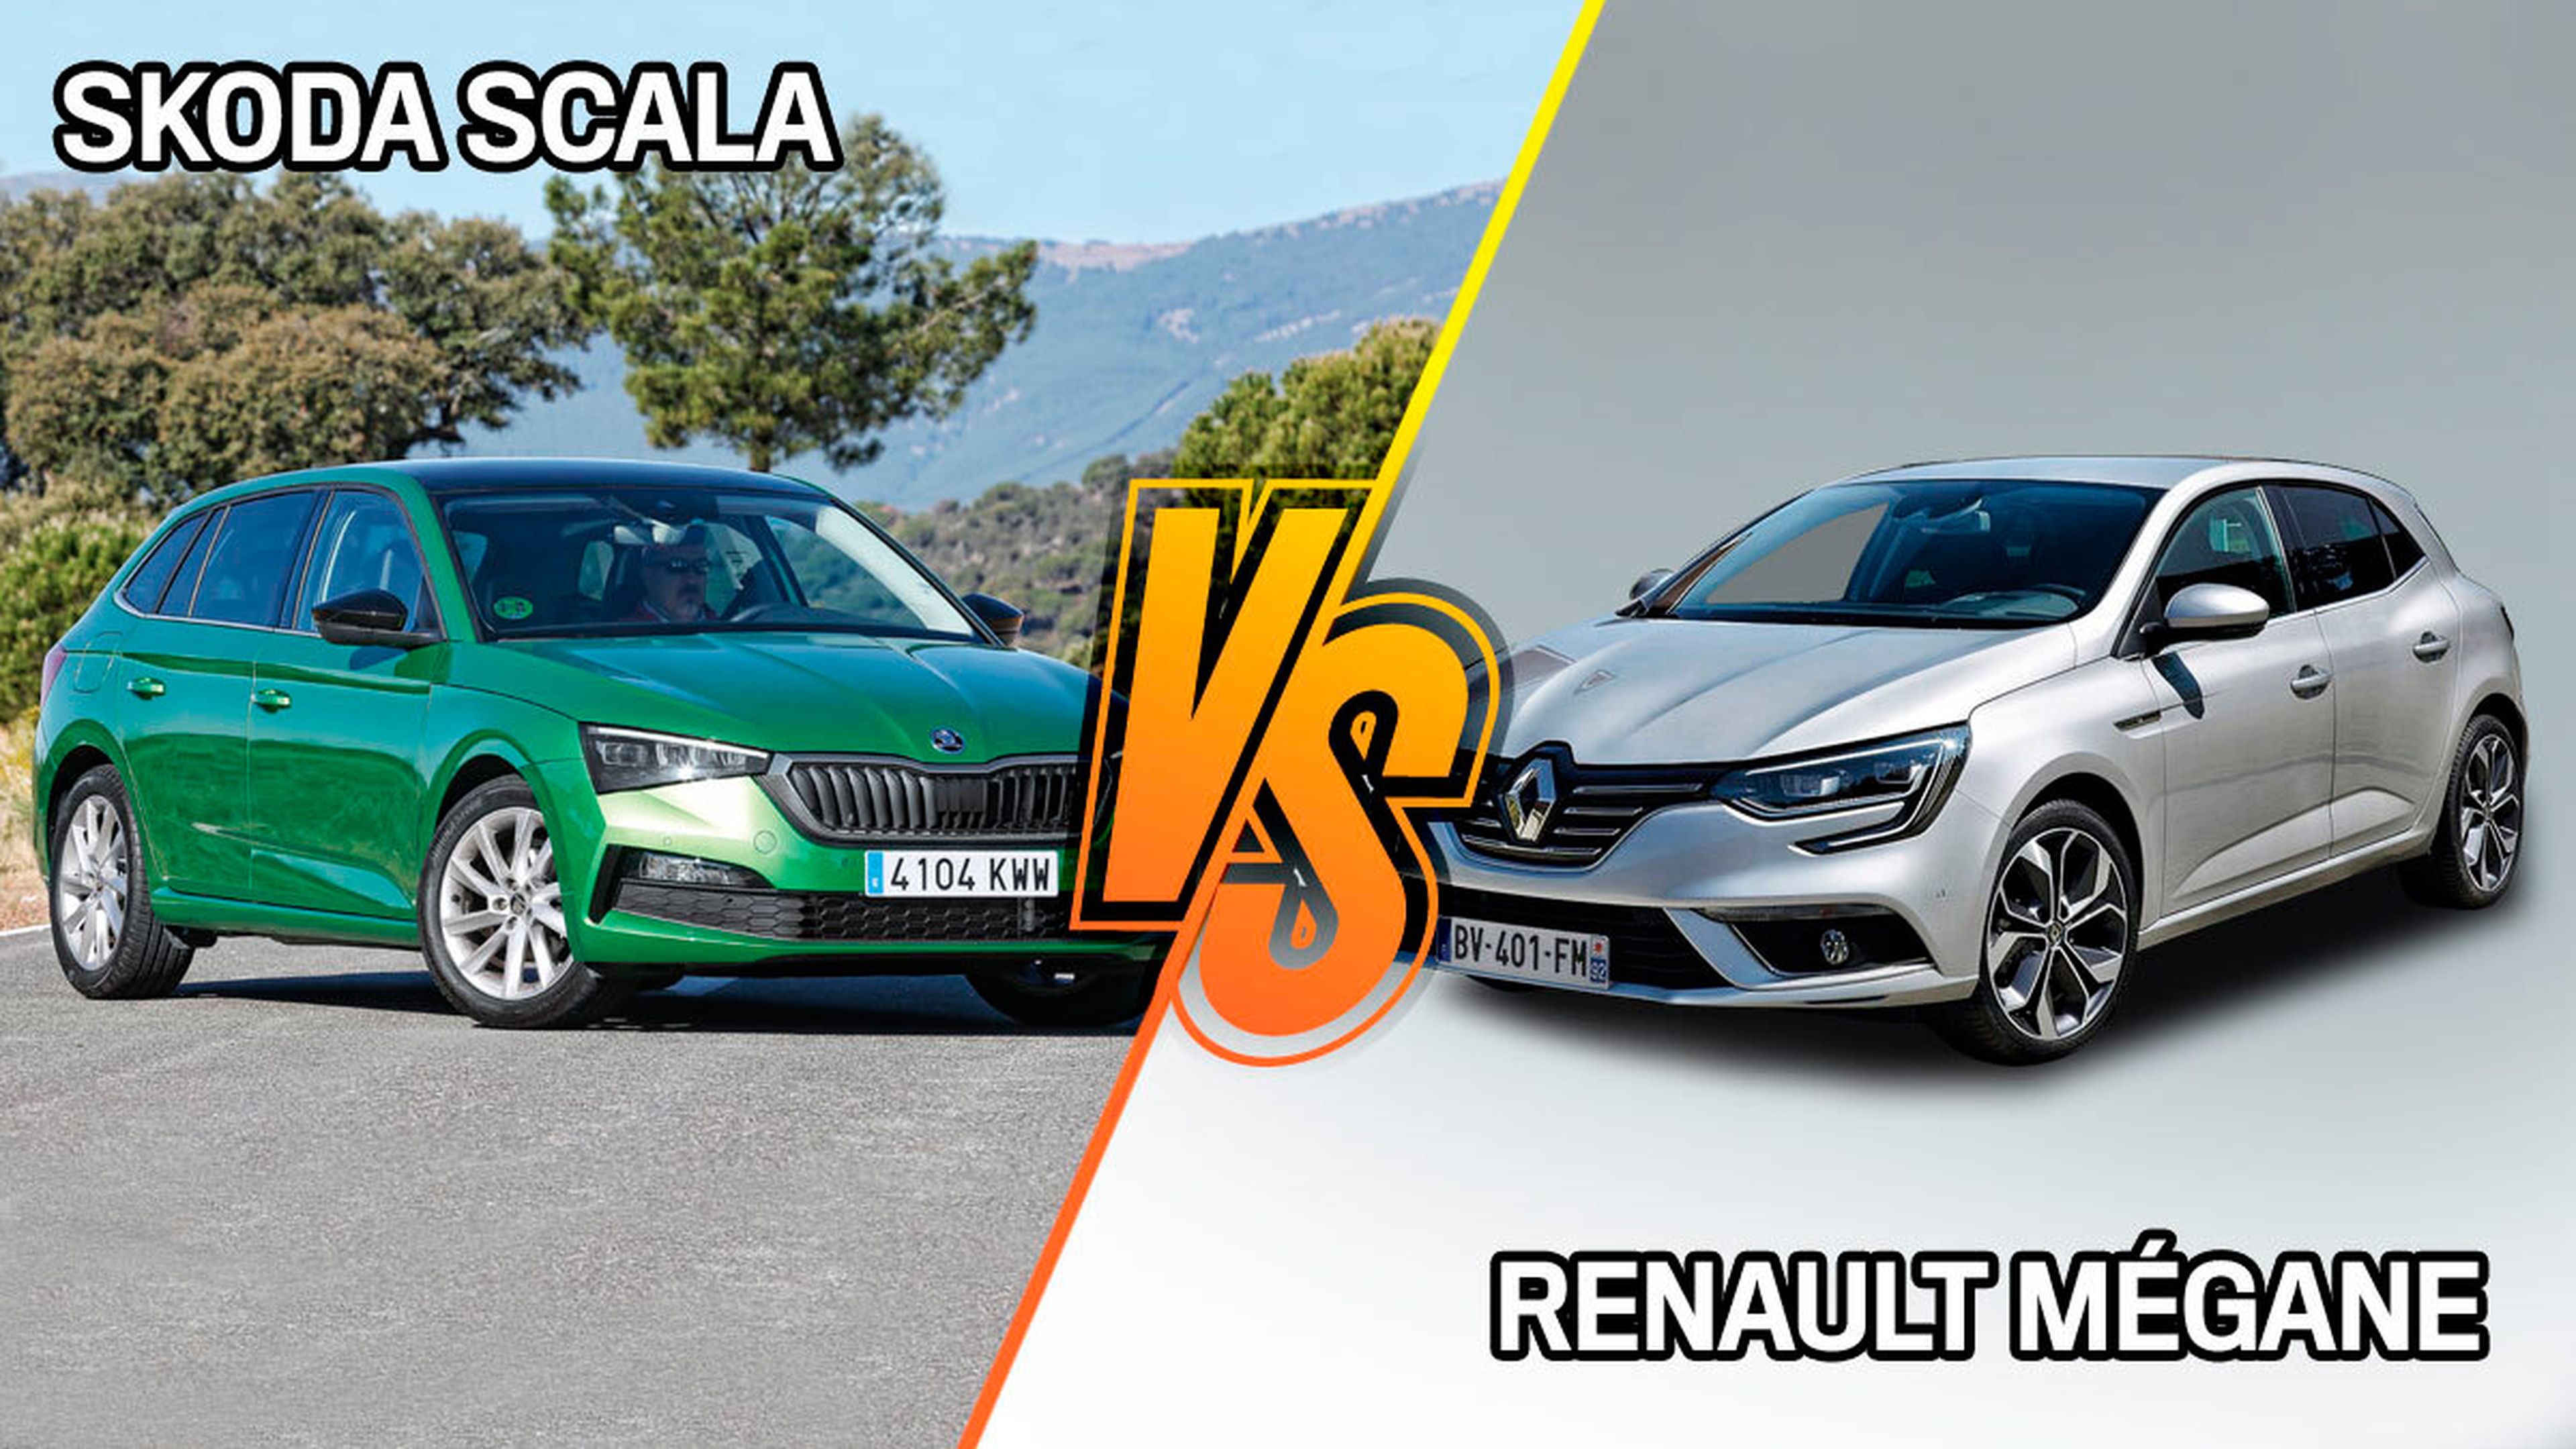 Skoda Scala o Renault Megane, cual es mejor